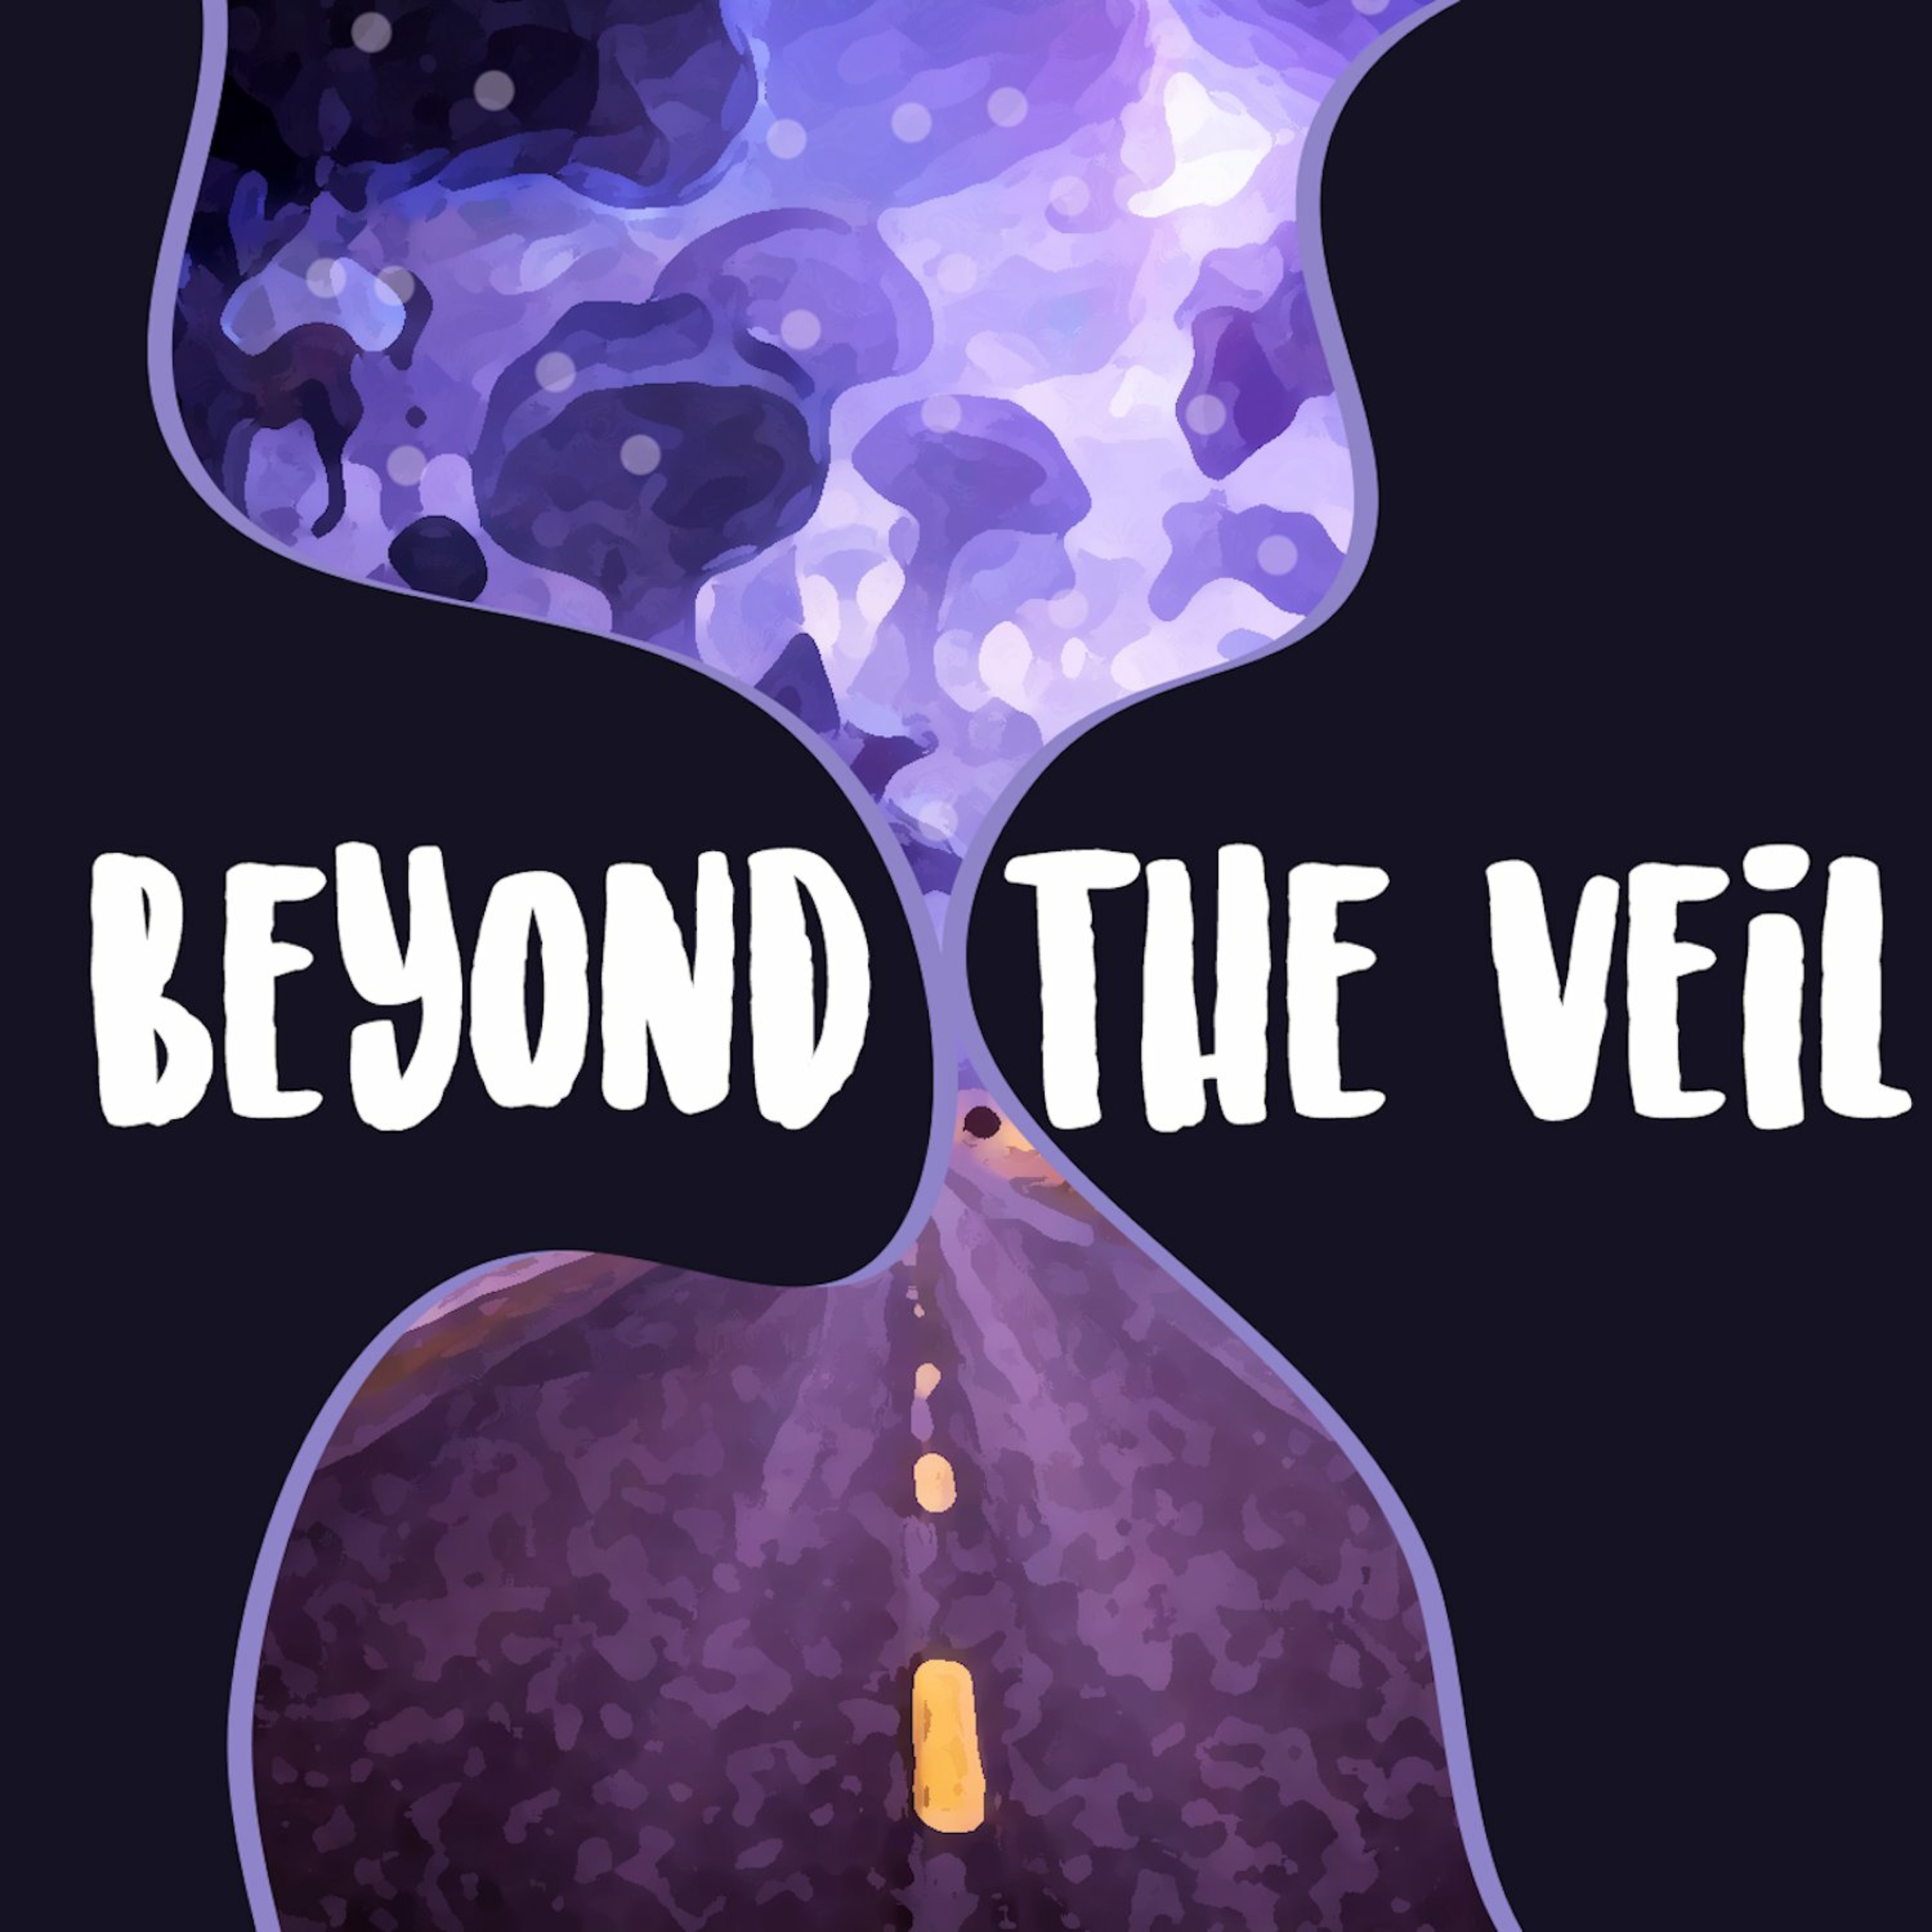 "Beyond the Veil" Podcast